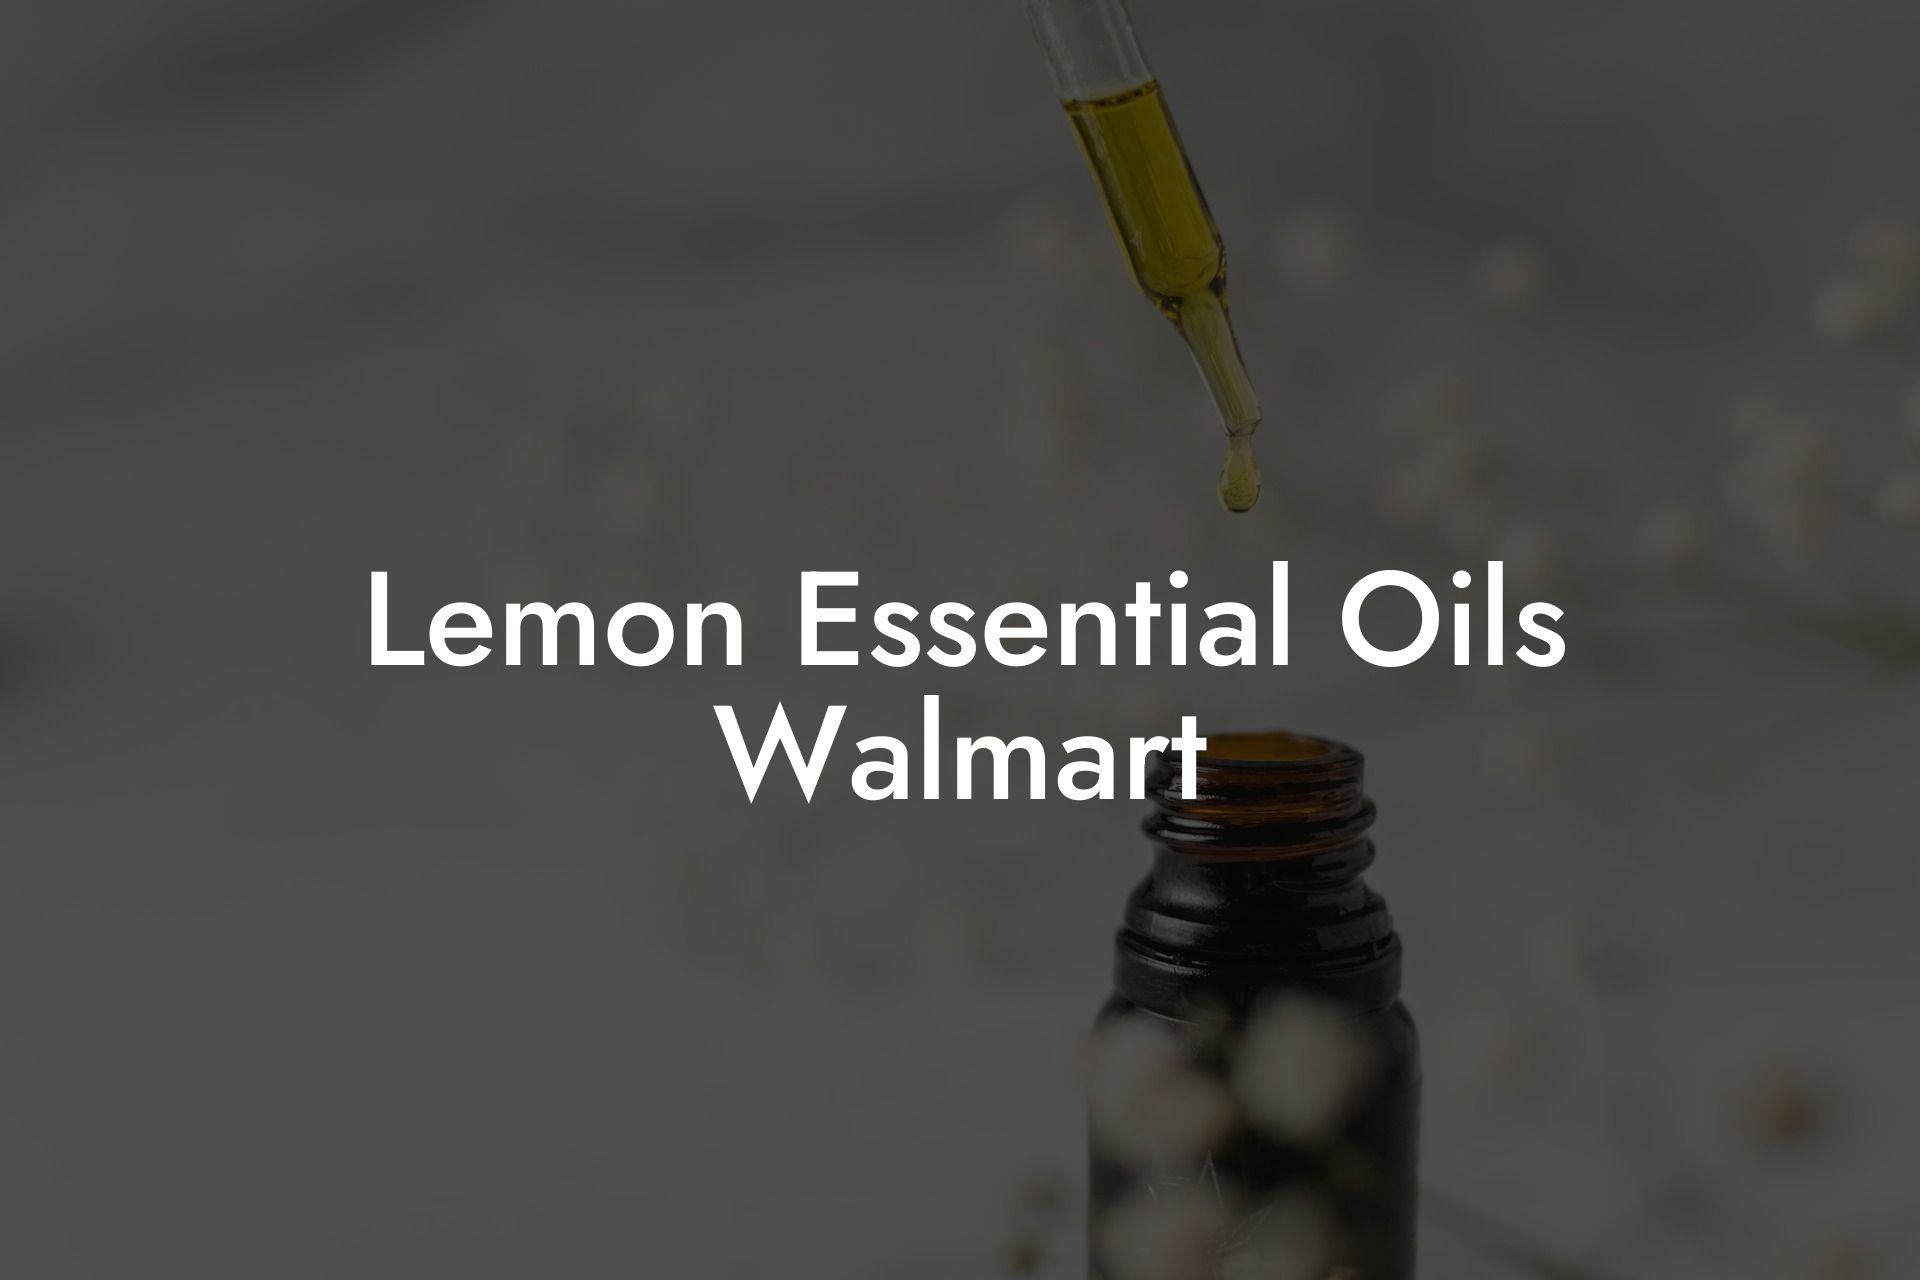 Lemon Essential Oils Walmart